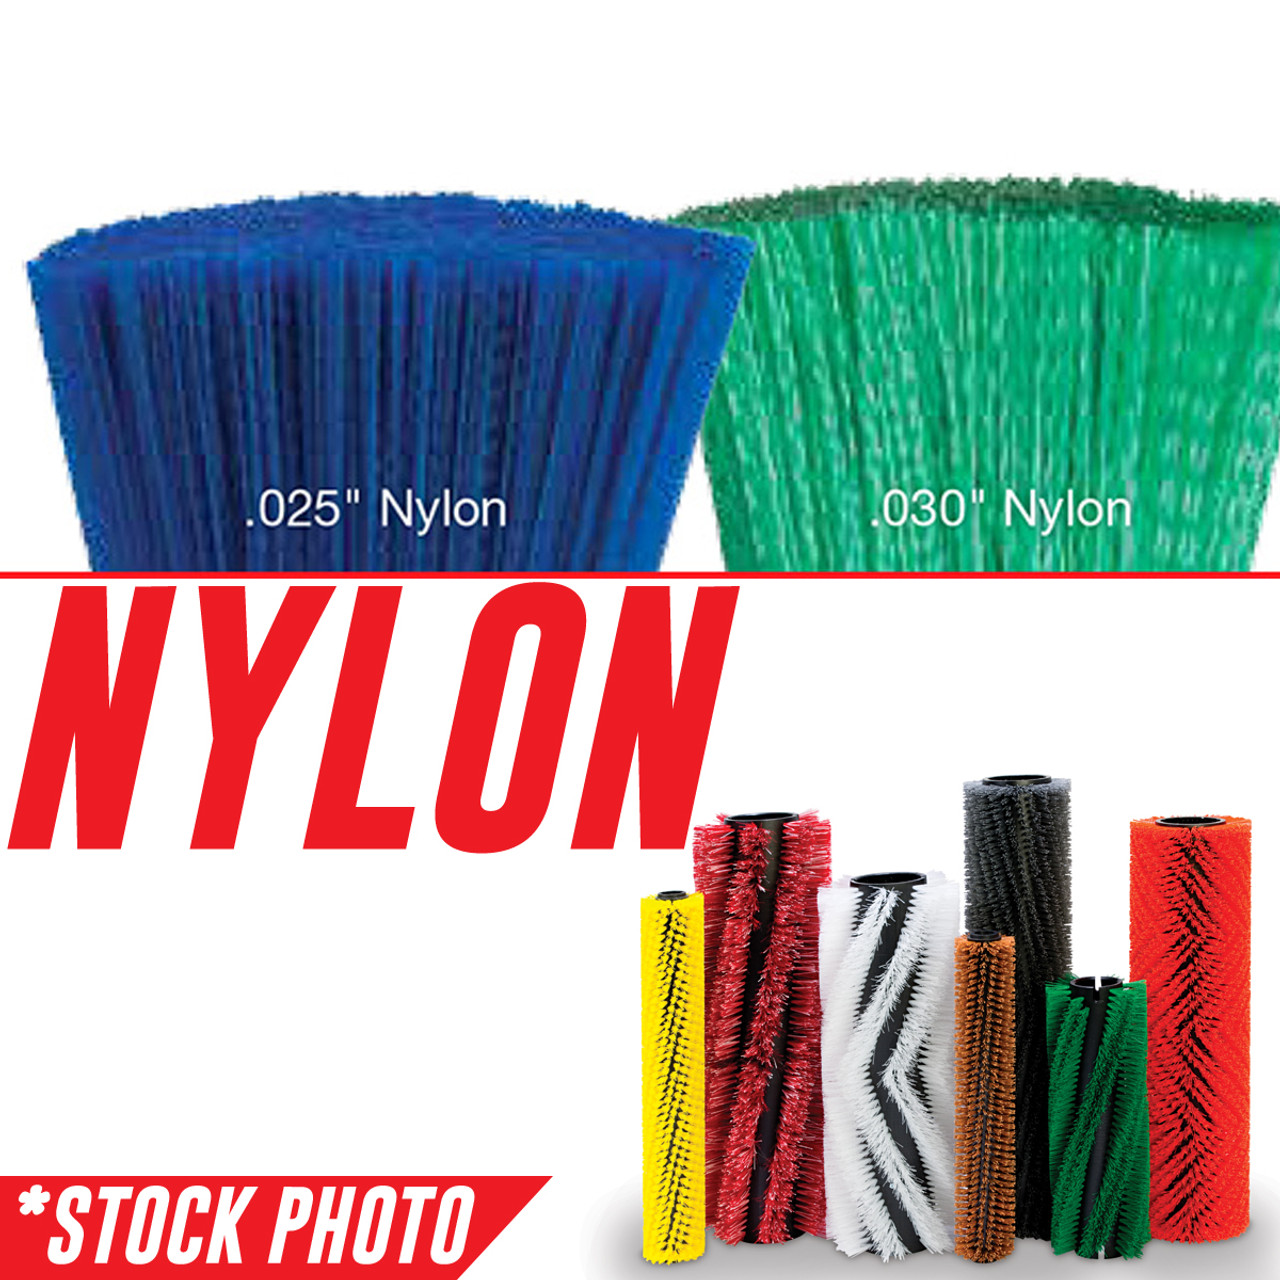 56314779: 35" Cylindrical Brush 16 Single Row Hard Nylon fits Advance-Nilfisk Models Adgressor 3520